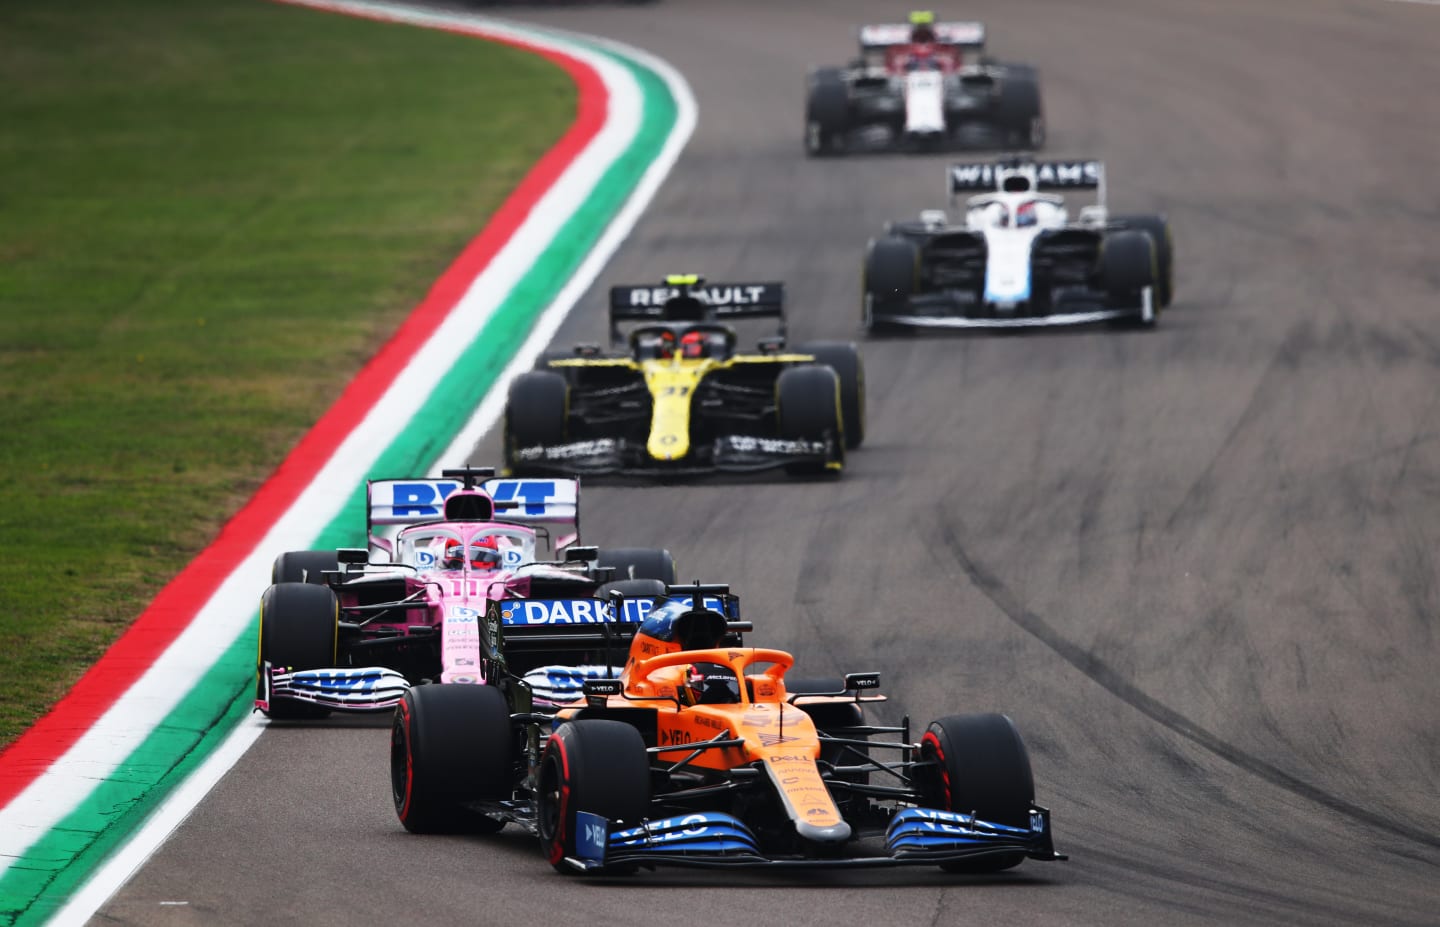 IMOLA, ITALY - NOVEMBER 01: Carlos Sainz of Spain driving the (55) McLaren F1 Team MCL35 Renault